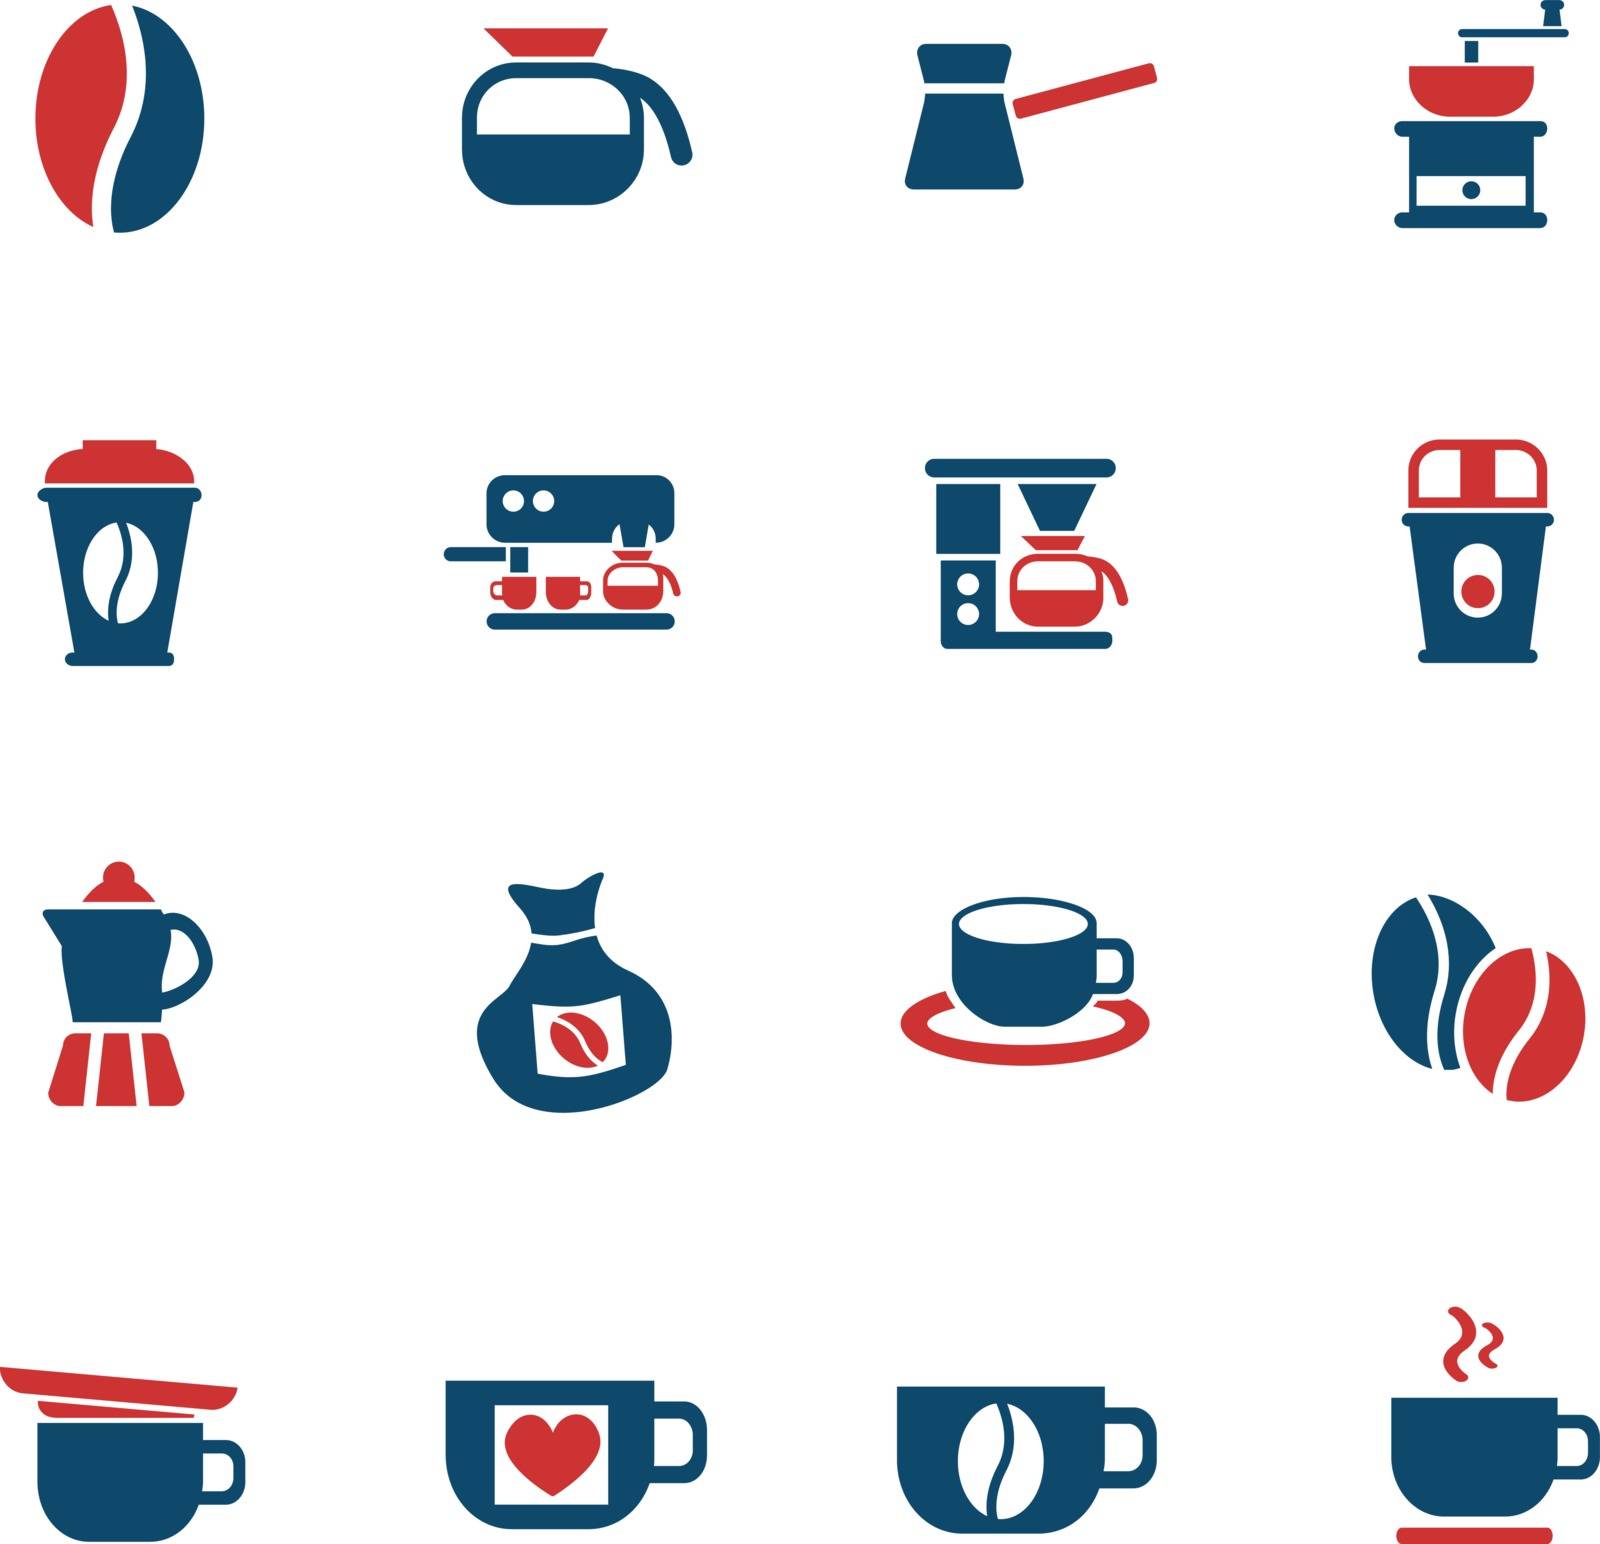 coffee icon set by ayax